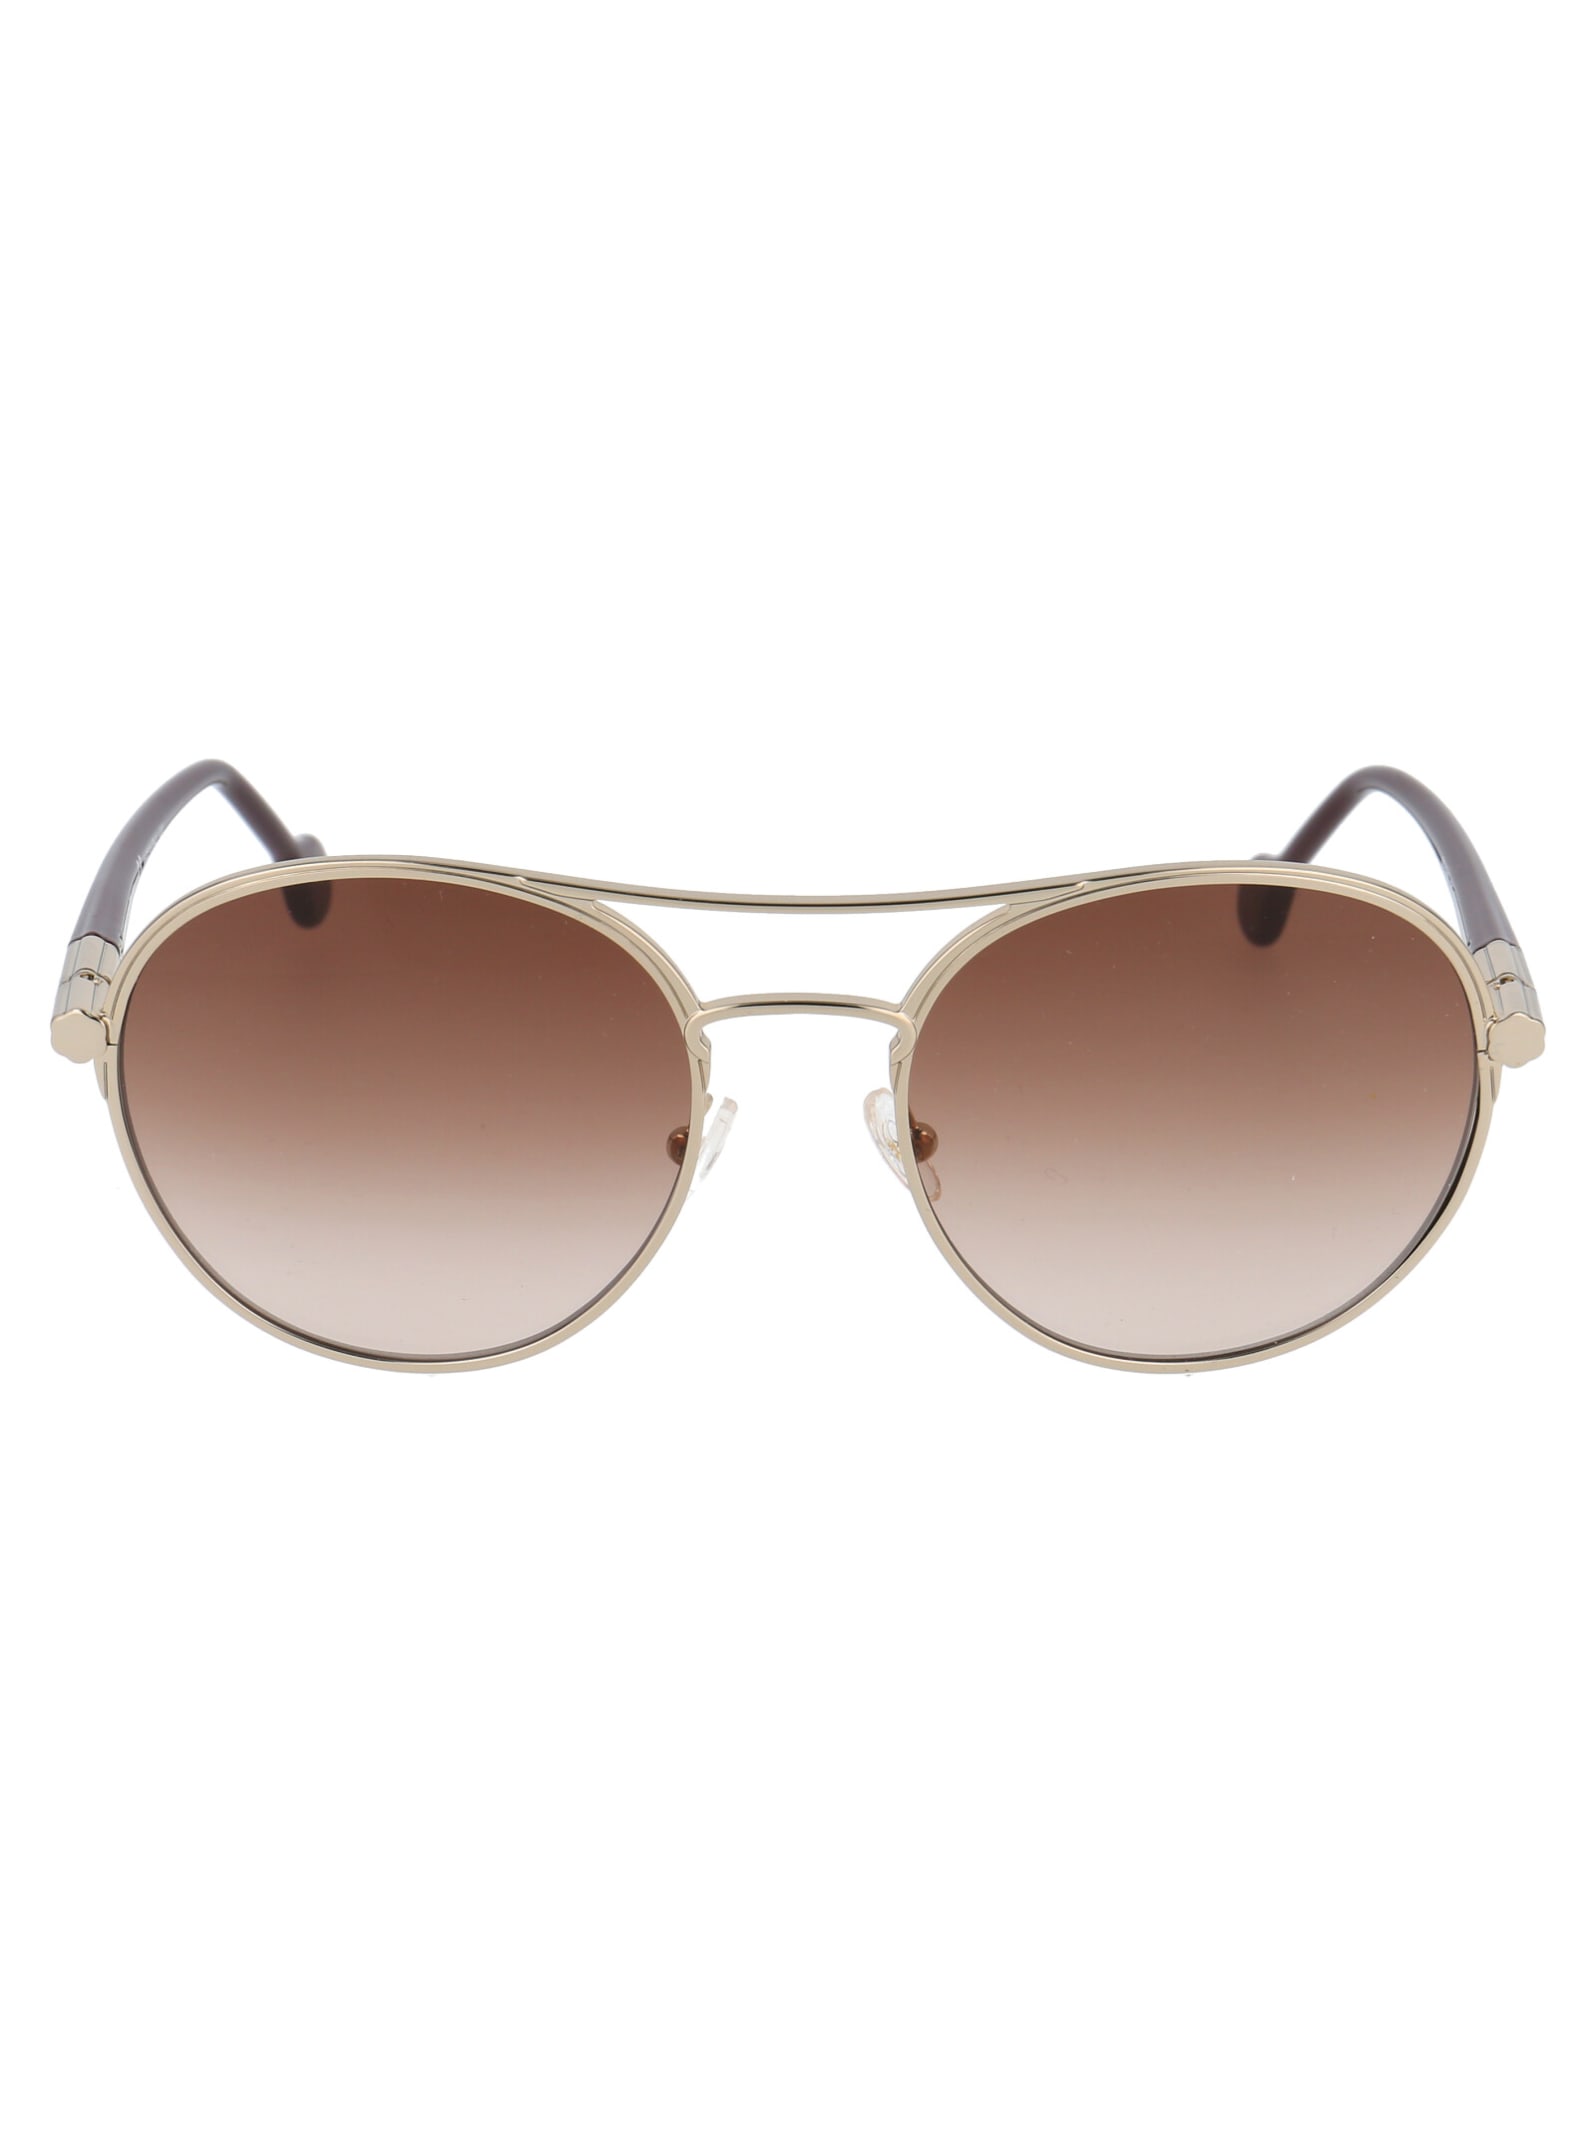 Salvatore Ferragamo Eyewear Sf2174s Sunglasses